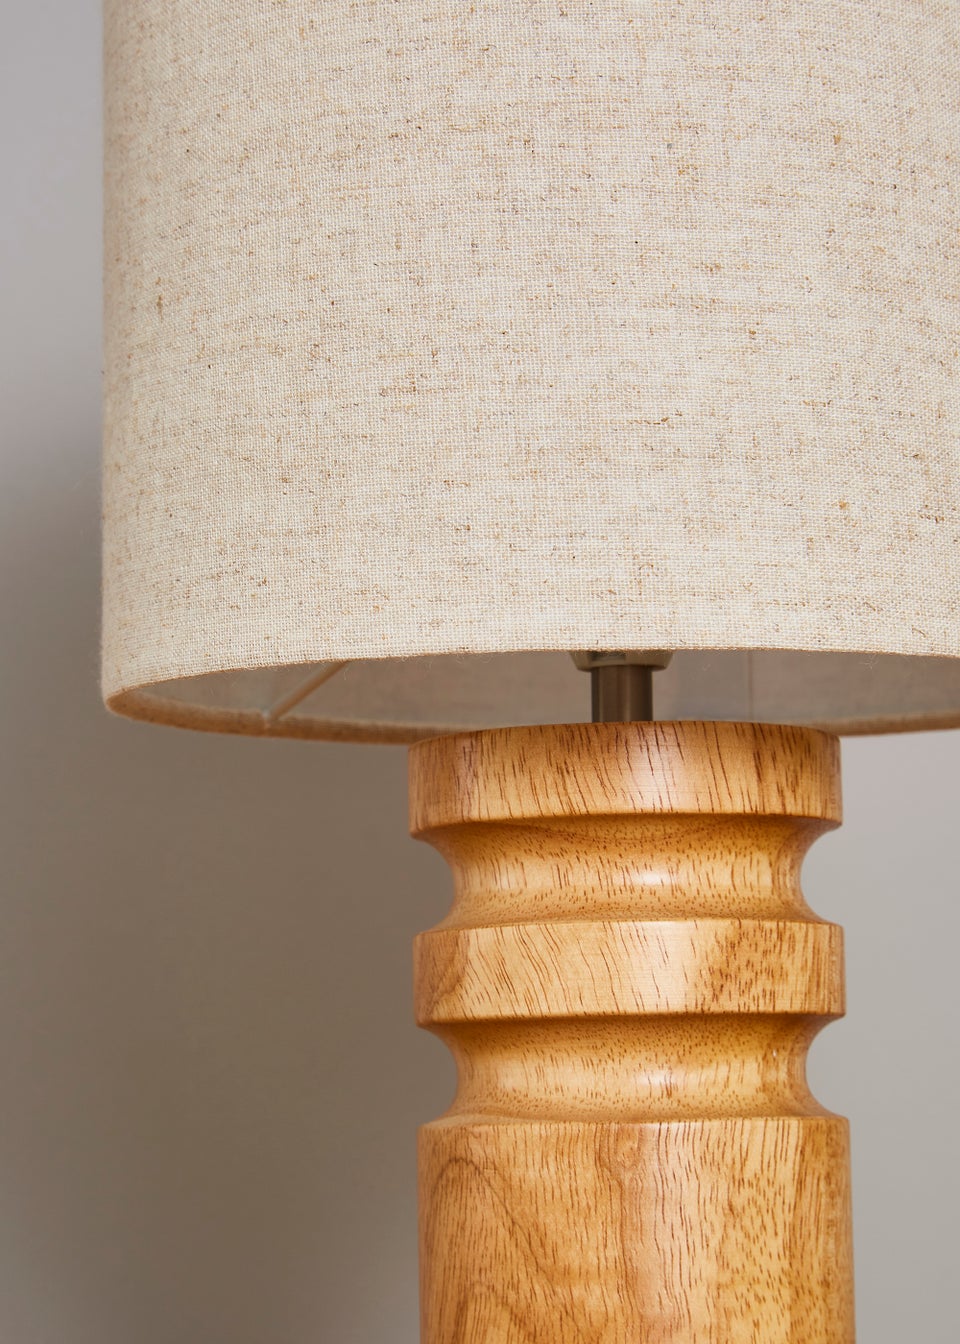 Inlight Wooden Base Table Lamp (41cm x 21cm)